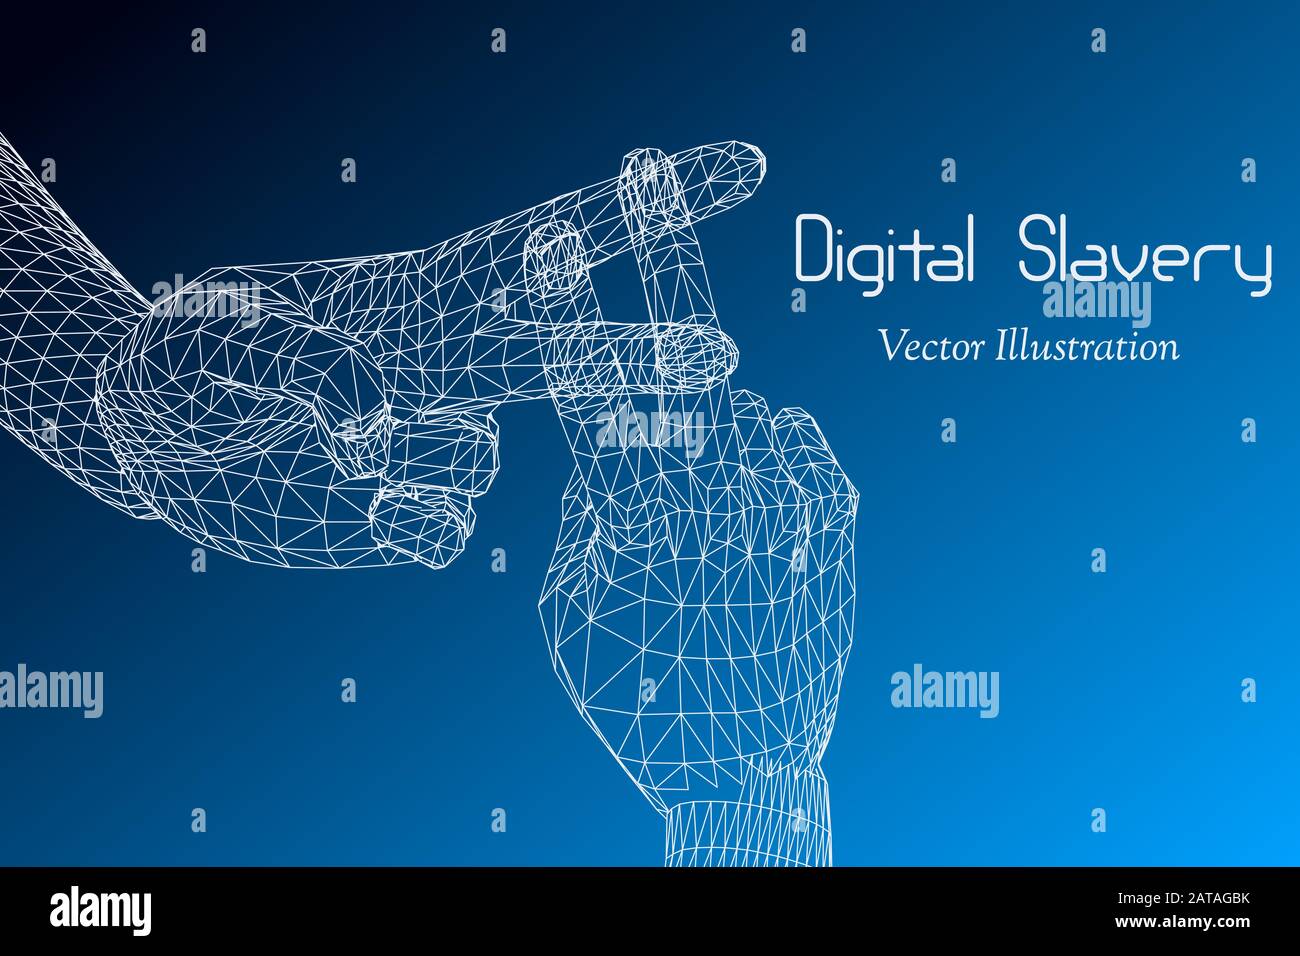 Vector Digital Slavery Concept  - Behind Bars of Digital Gadgets or Social Networks Stock Vector